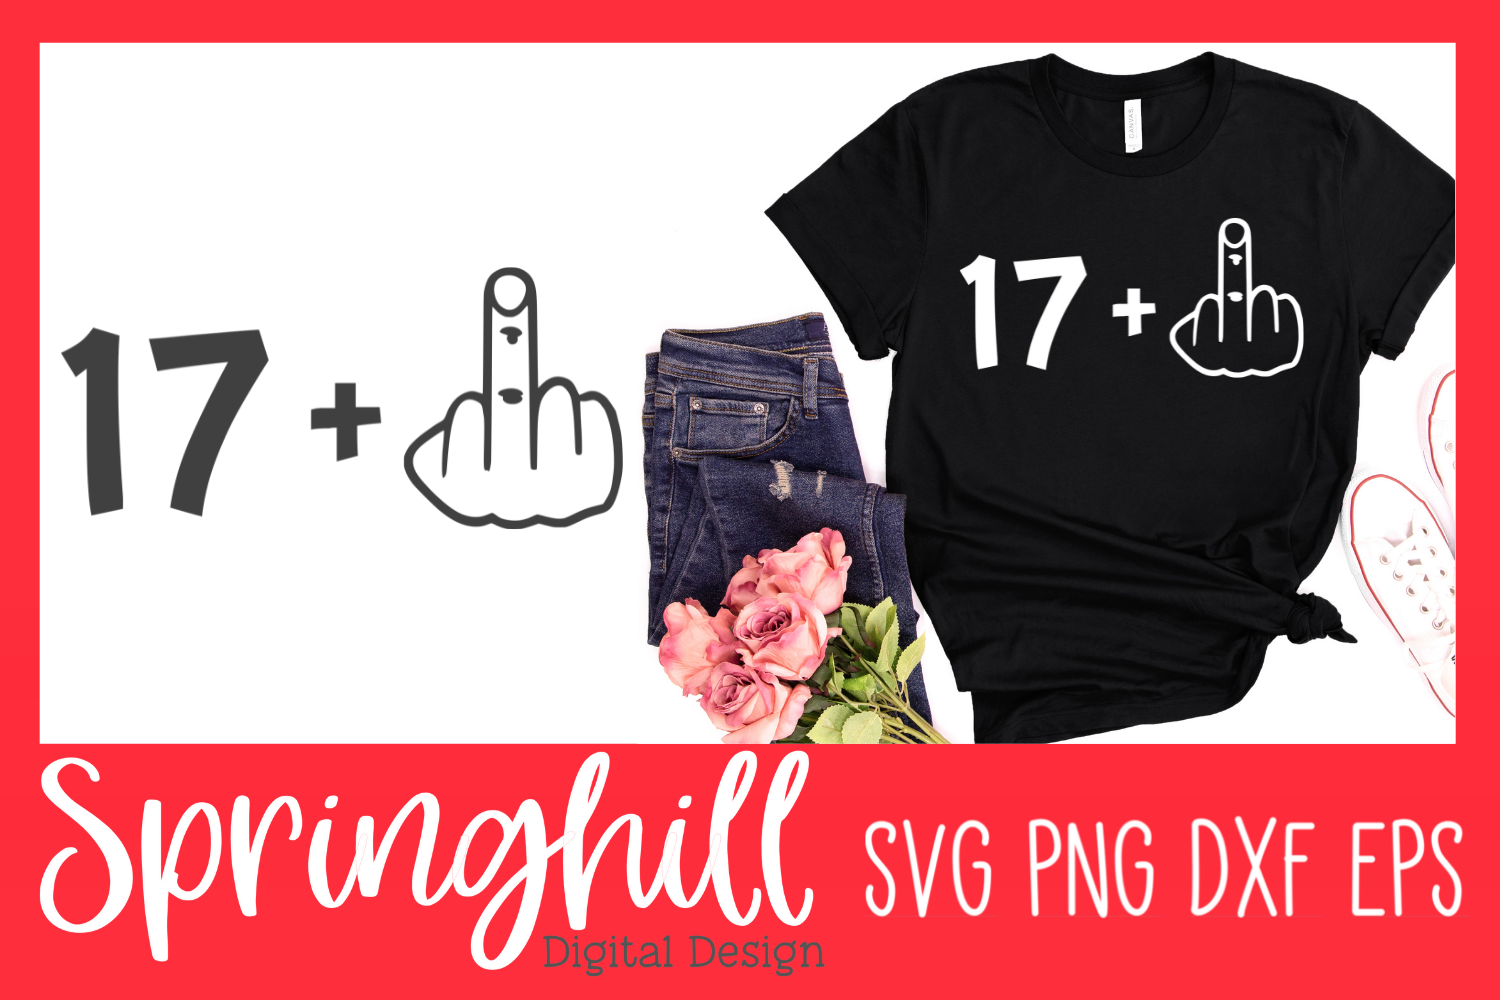 Birthday girl, girly birthday shirt design - free svg file for members -  SVG Heart